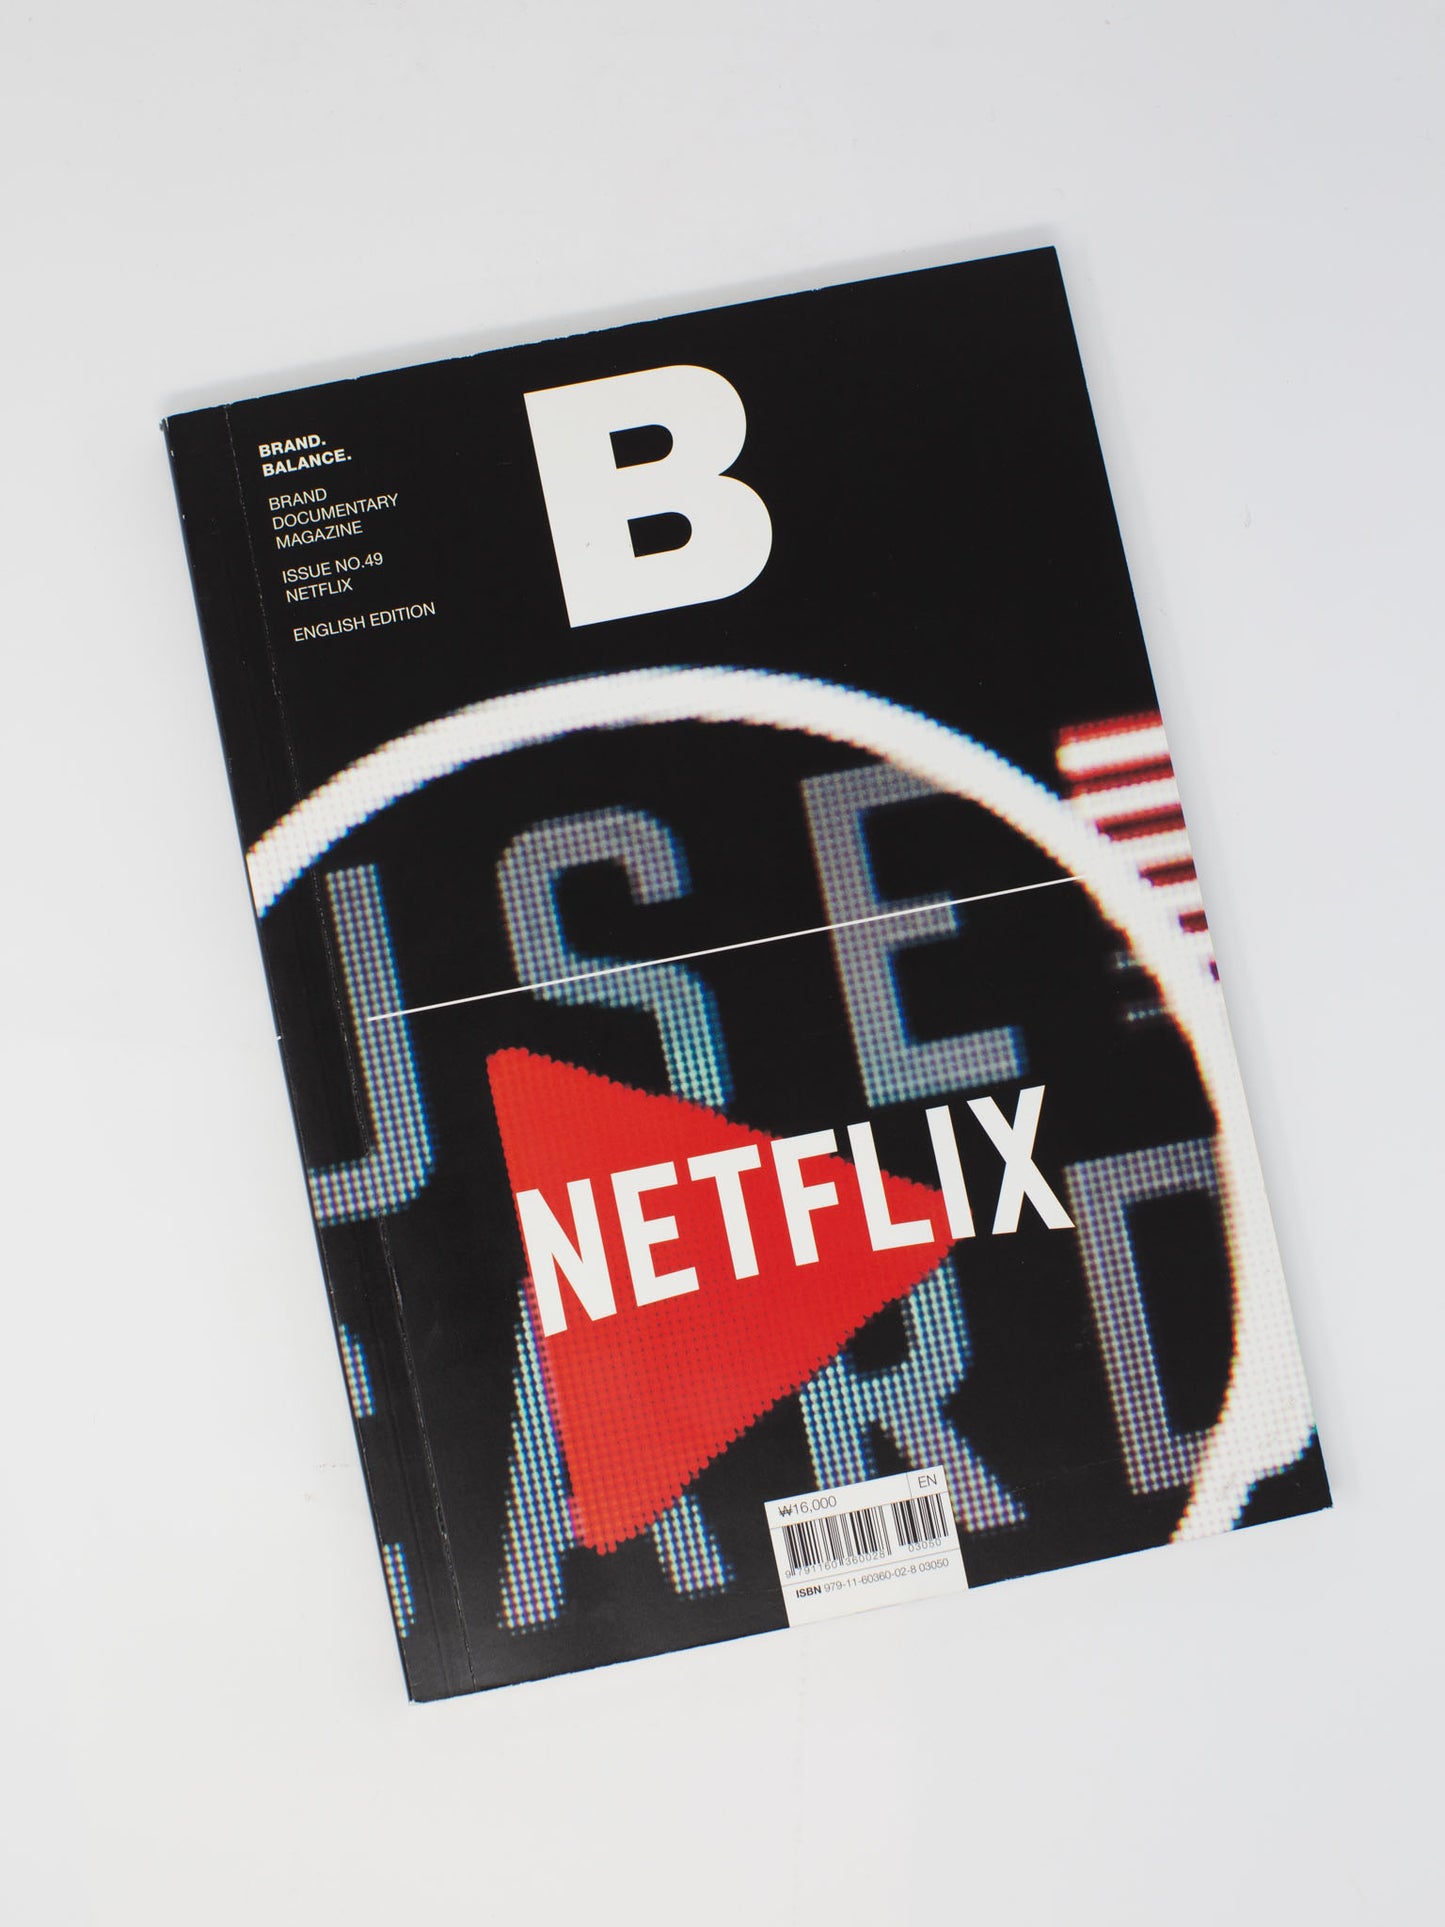 Magazine B - Title Initial N